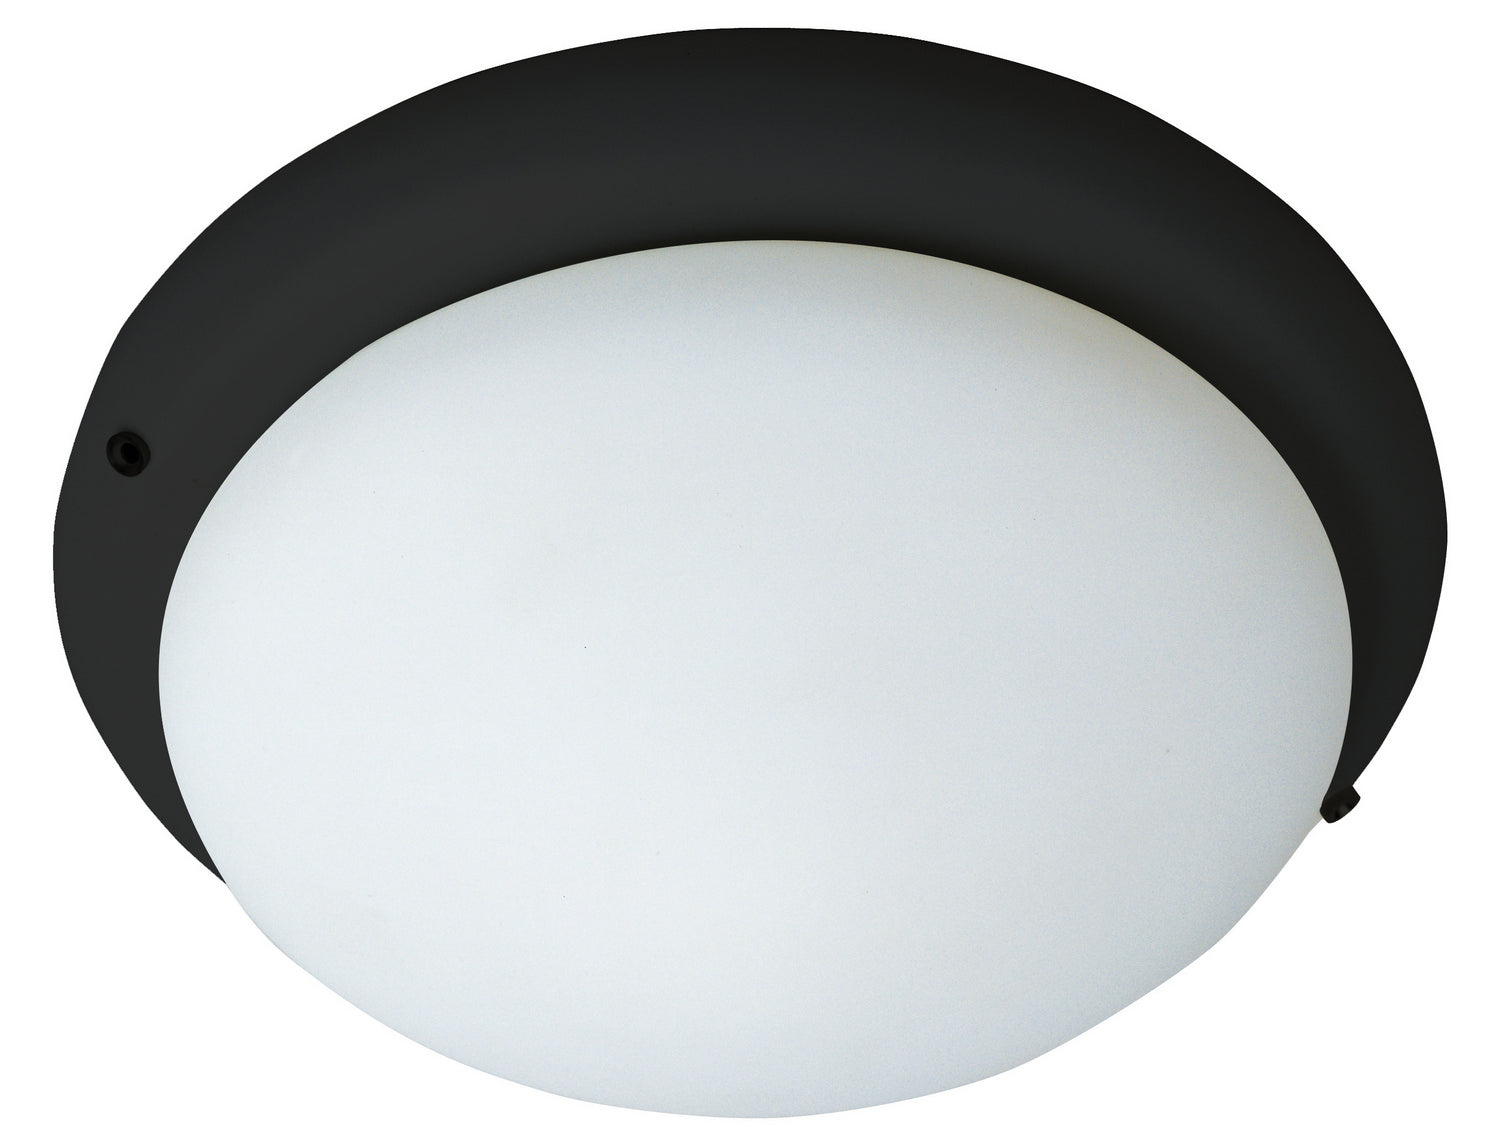 Maxim - One Light Ceiling Fan Light Kit - Fan Light Kits - Black- Union Lighting Luminaires Decor